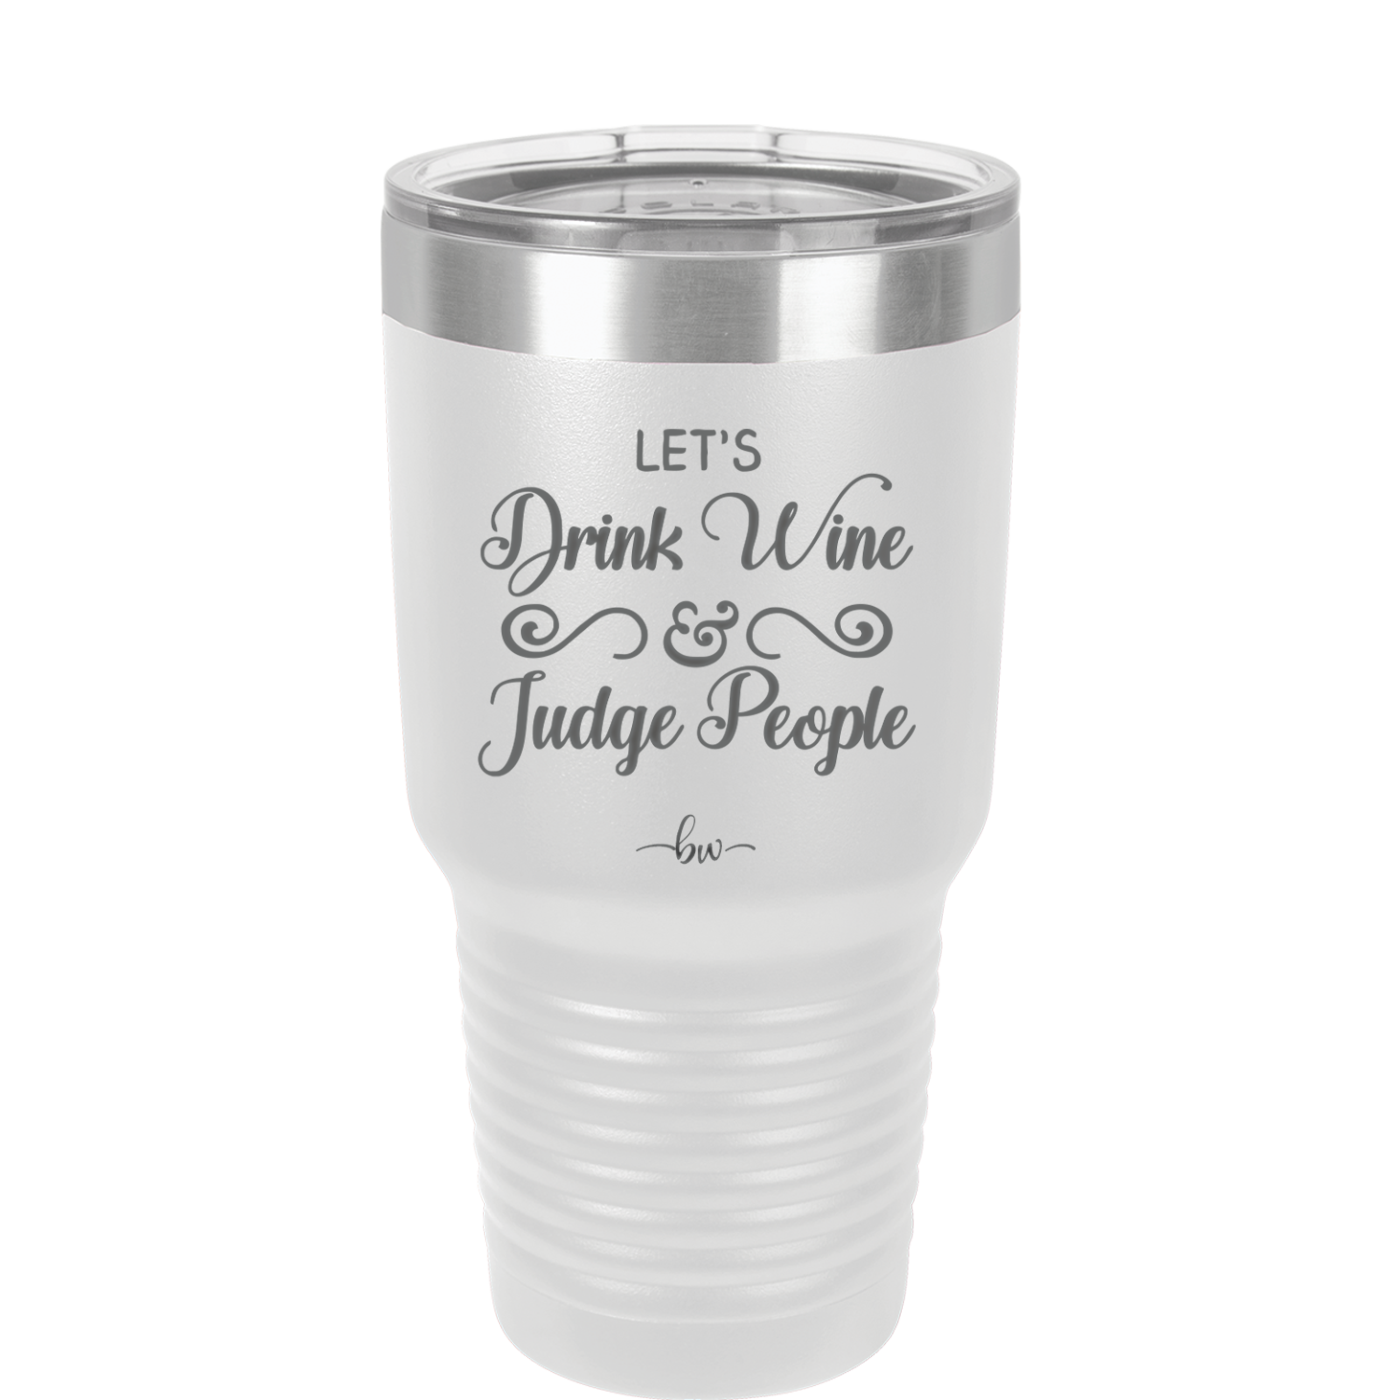 Let's Drink Wine and Judge People - Laser Engraved Stainless Steel Drinkware - 1063 -